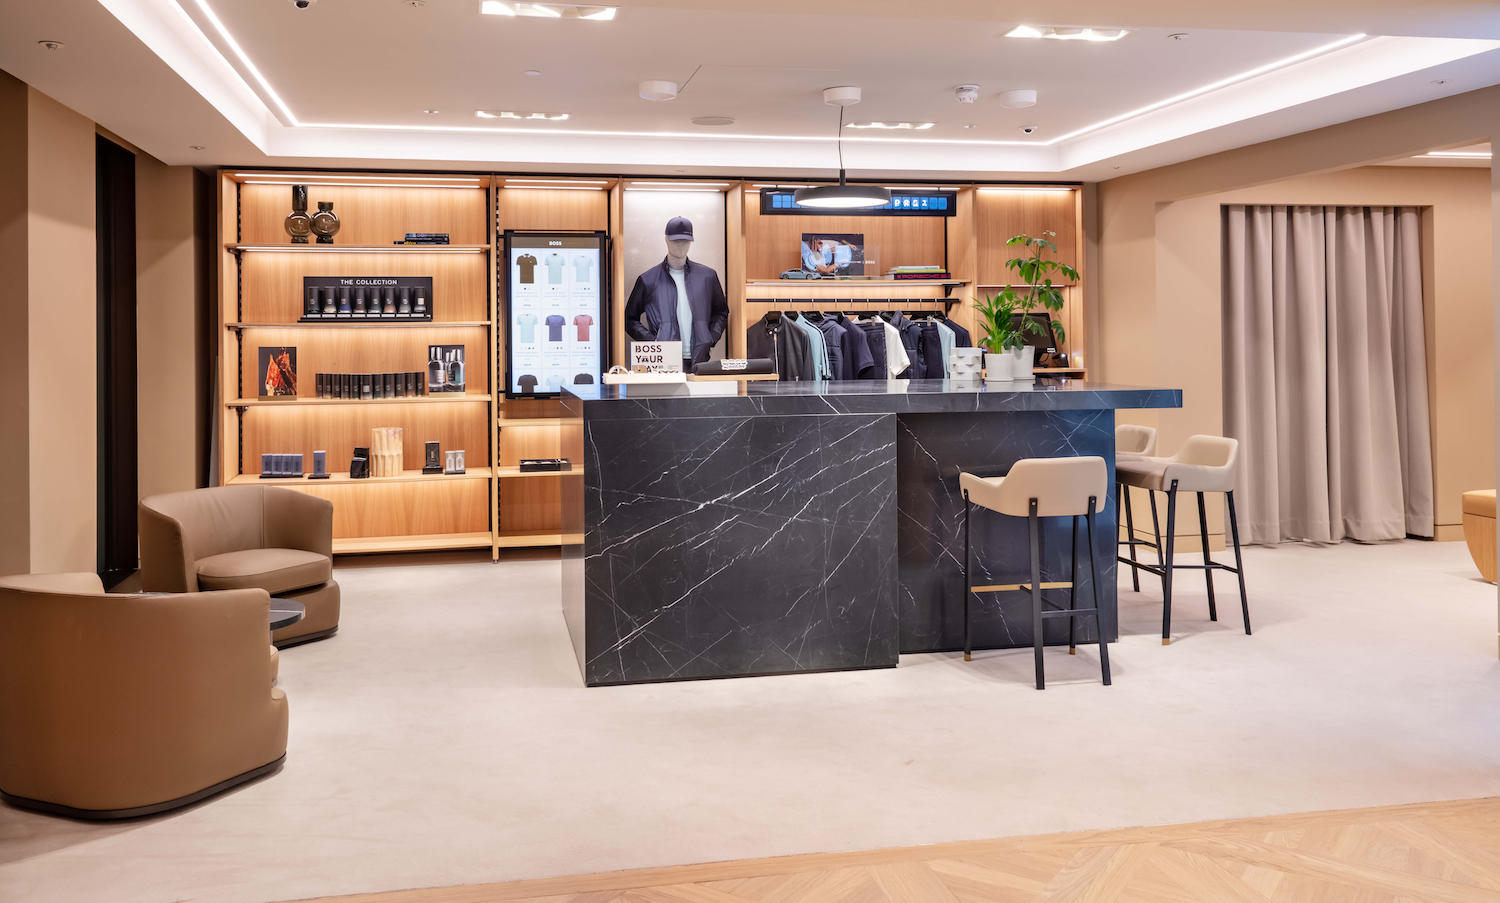 Flourish Demokrati Idol BOSS launch new Oxford Street store concept and experience - Retail Focus -  Retail Design